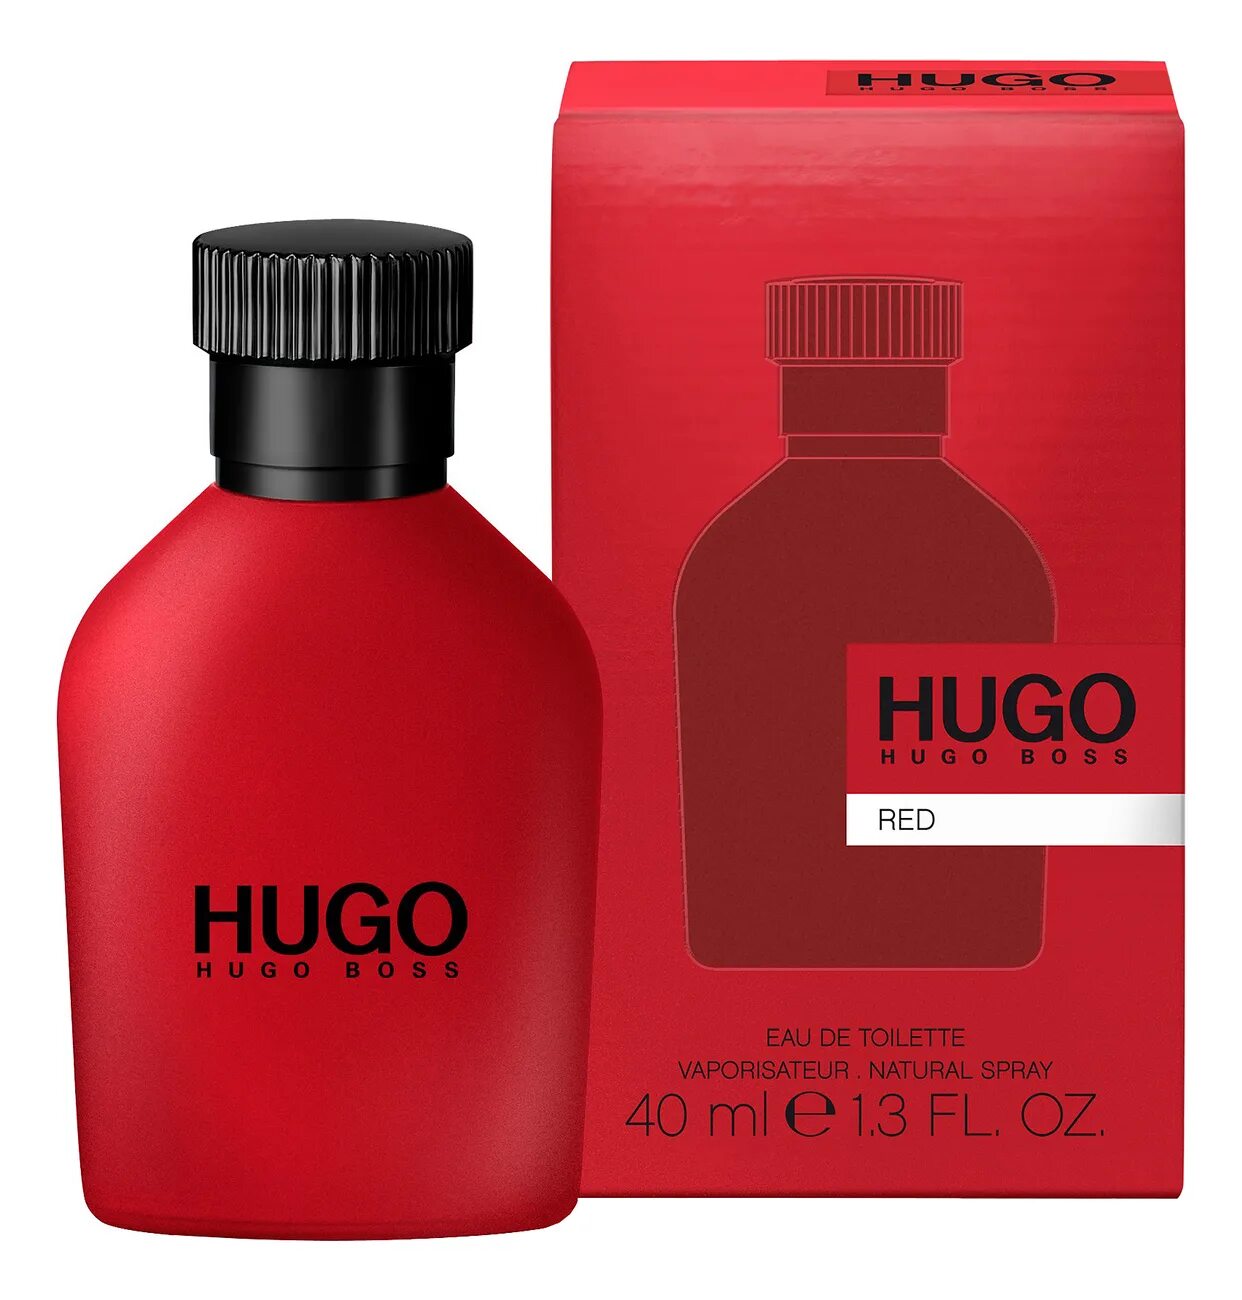 Hugo Boss "Hugo Red" EDT, 100ml. Hugo Boss Red, EDT., 150 ml. Hugo Boss Red EDT Хьюго босс ред туалетная вода 150 ml. Hugo Boss мужской Hugo туалетная вода (EDT) 40мл. Читать босс для красной